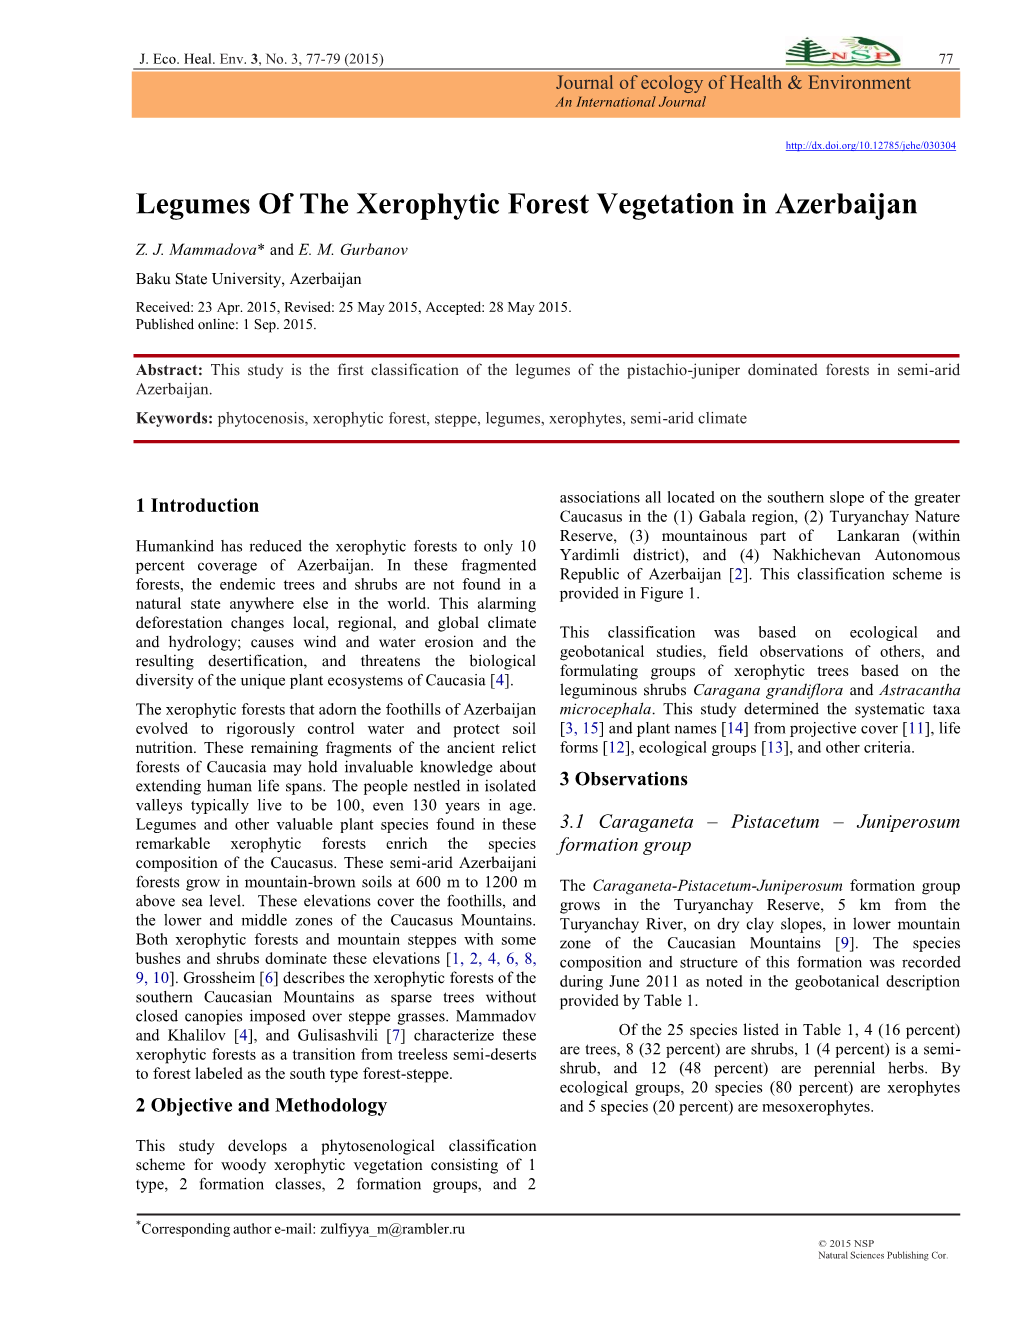 Legumes of the Xerophytic Forest Vegetation in Azerbaijan